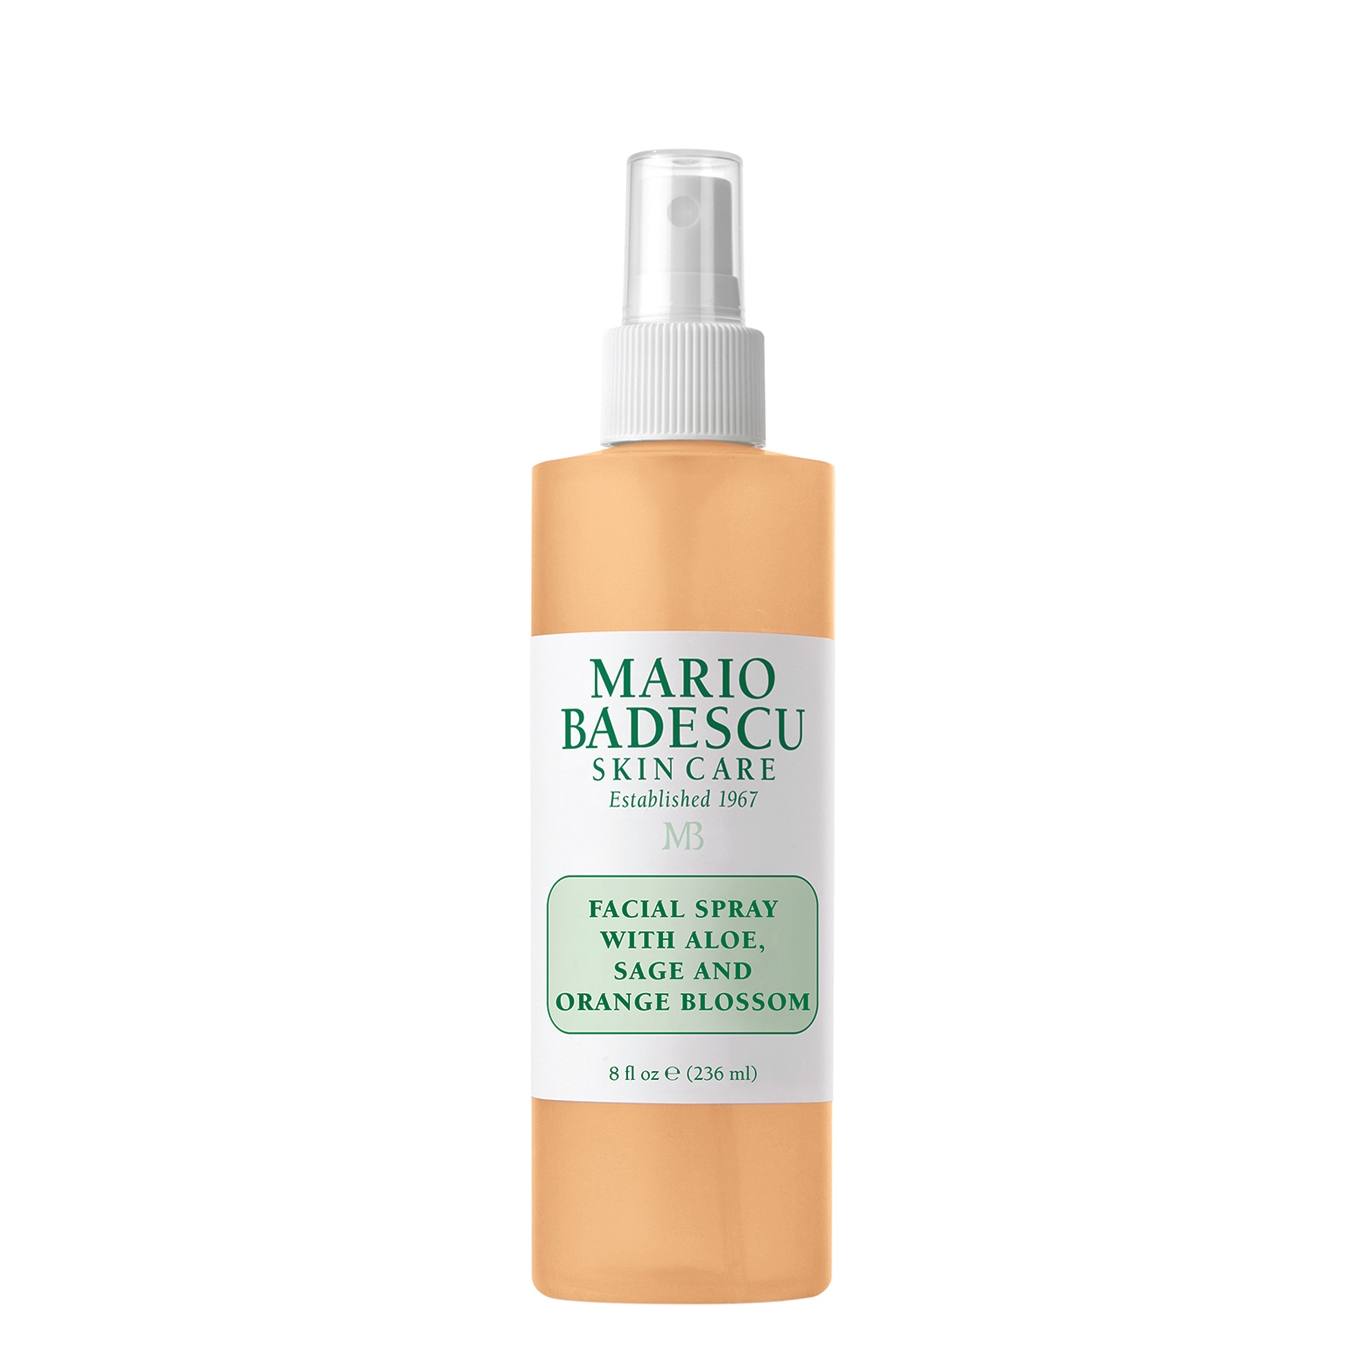 Mario Badescu Facial Spray With Aloe, Sage And Orange Blossom 236ml